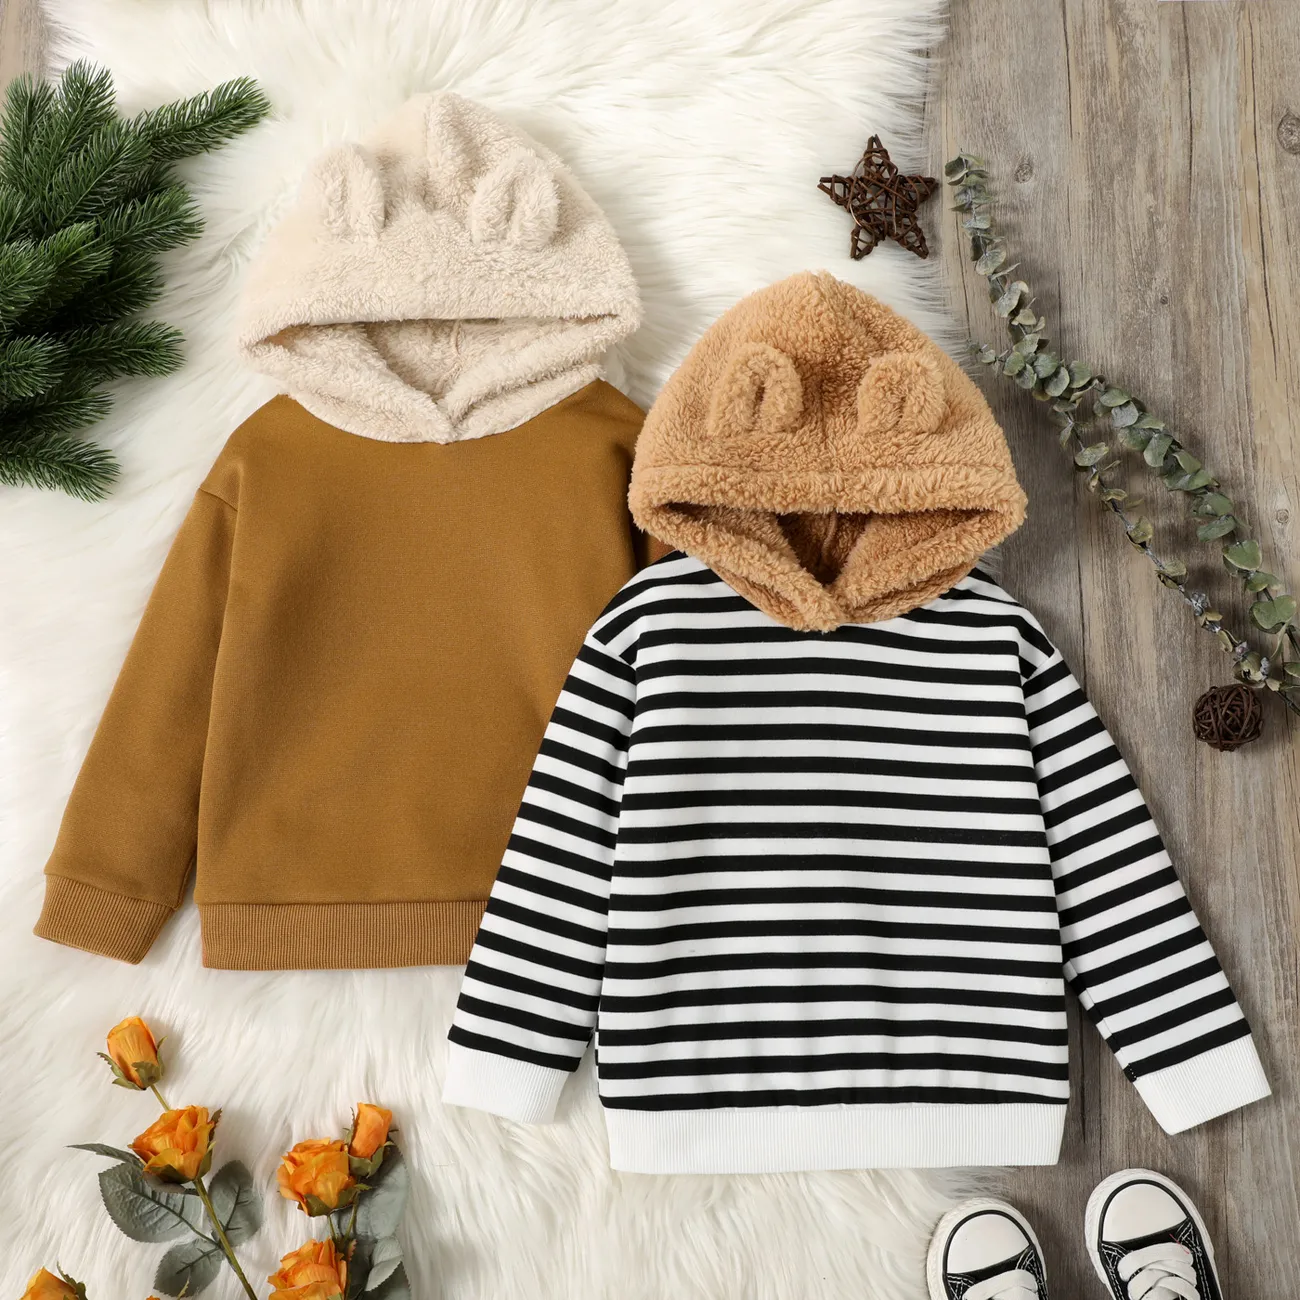 Toddler Boy Stripe/Solid Color Ear Design Fuzzy Hoodie Sweatshirt Black/White big image 1